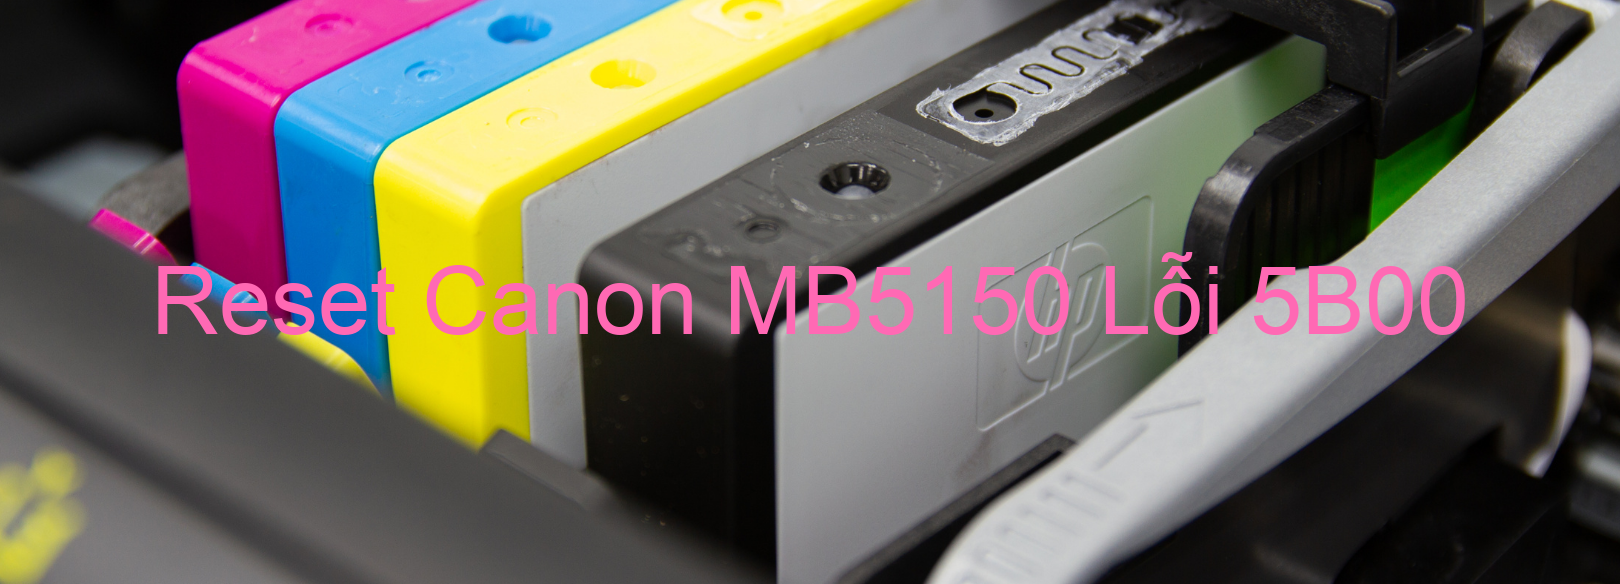 Reset Canon MB5150 Lỗi 5B00